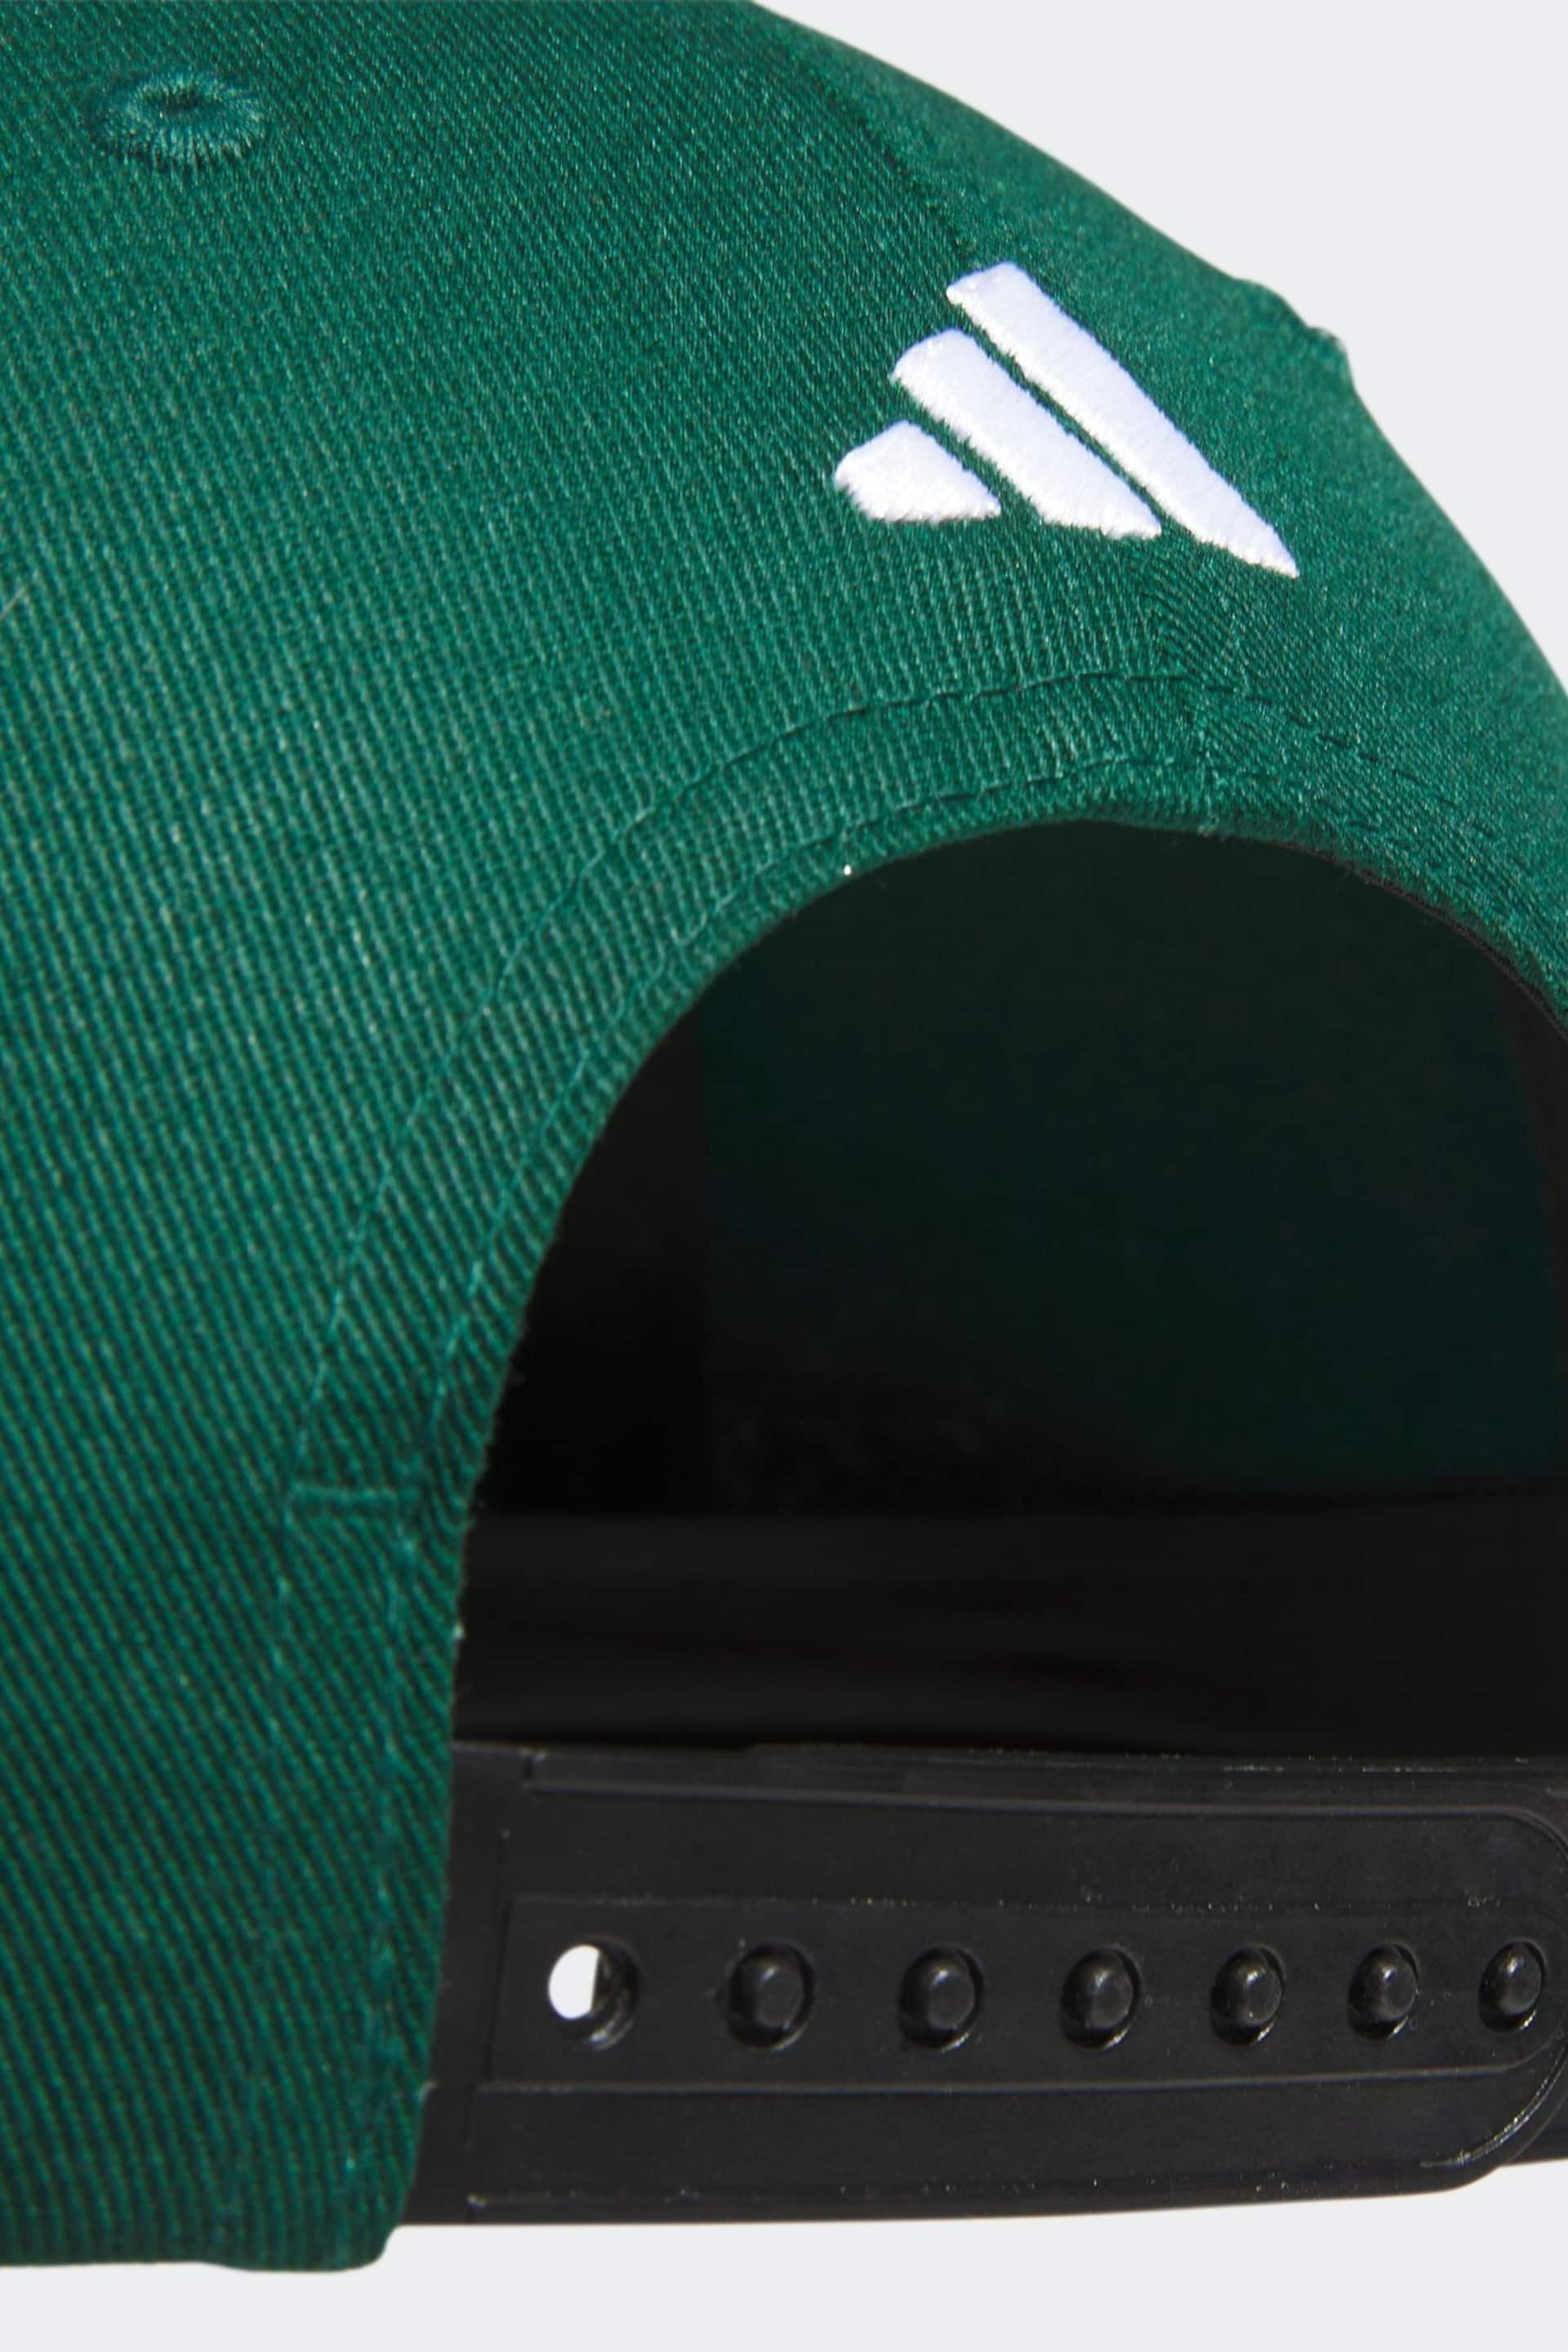 adidas Golf Womens Green Novelty Cap - Image 4 of 4